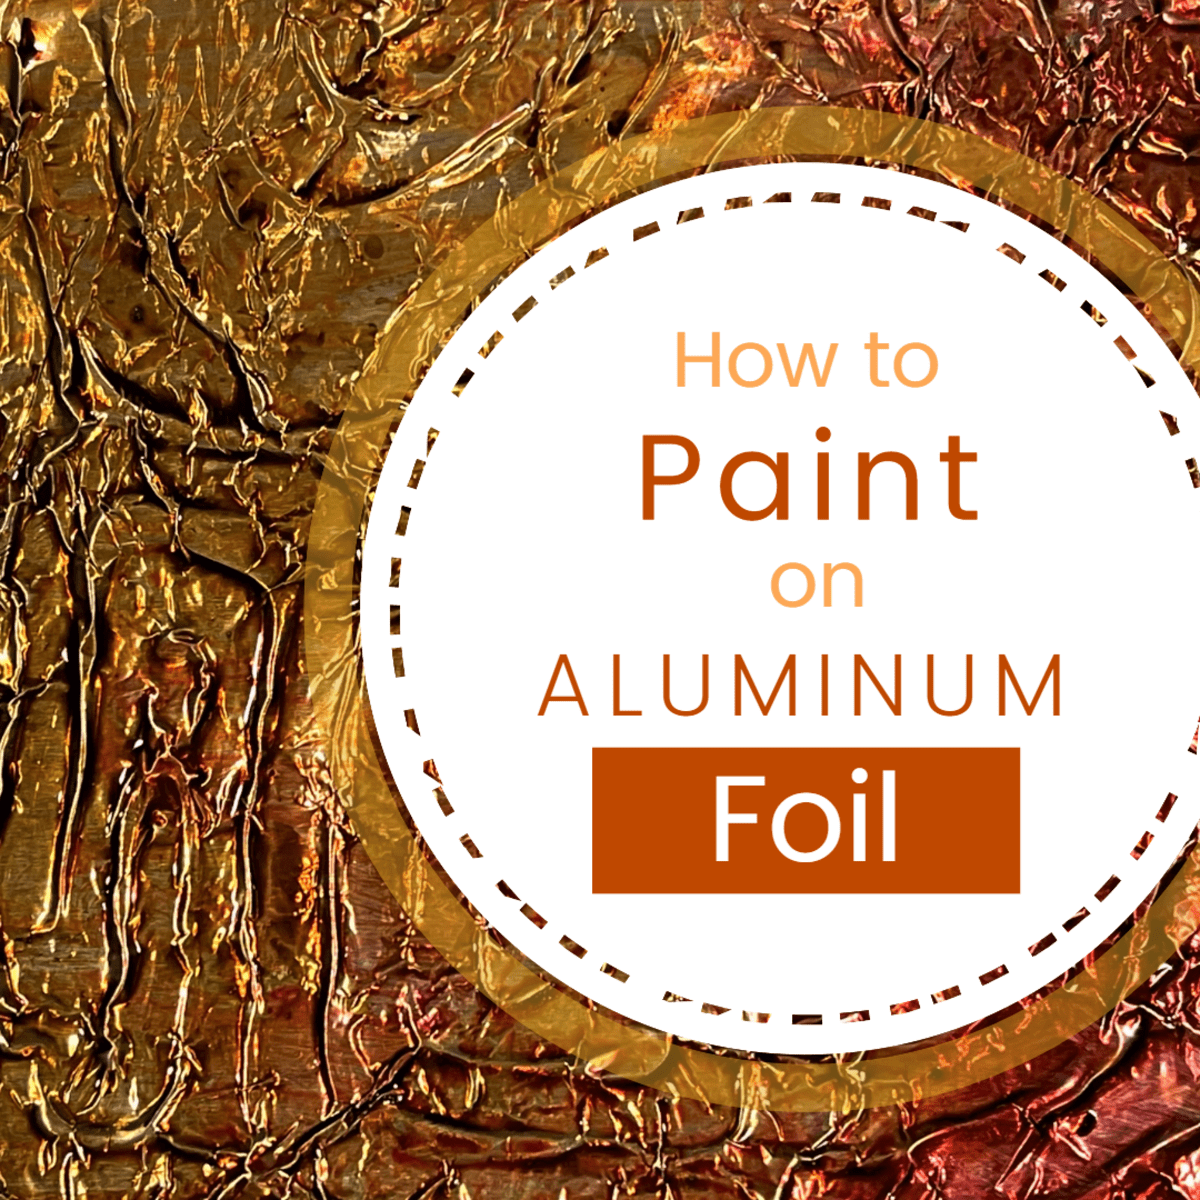 How to Paint on Aluminum Foil With Acrylics - FeltMagnet